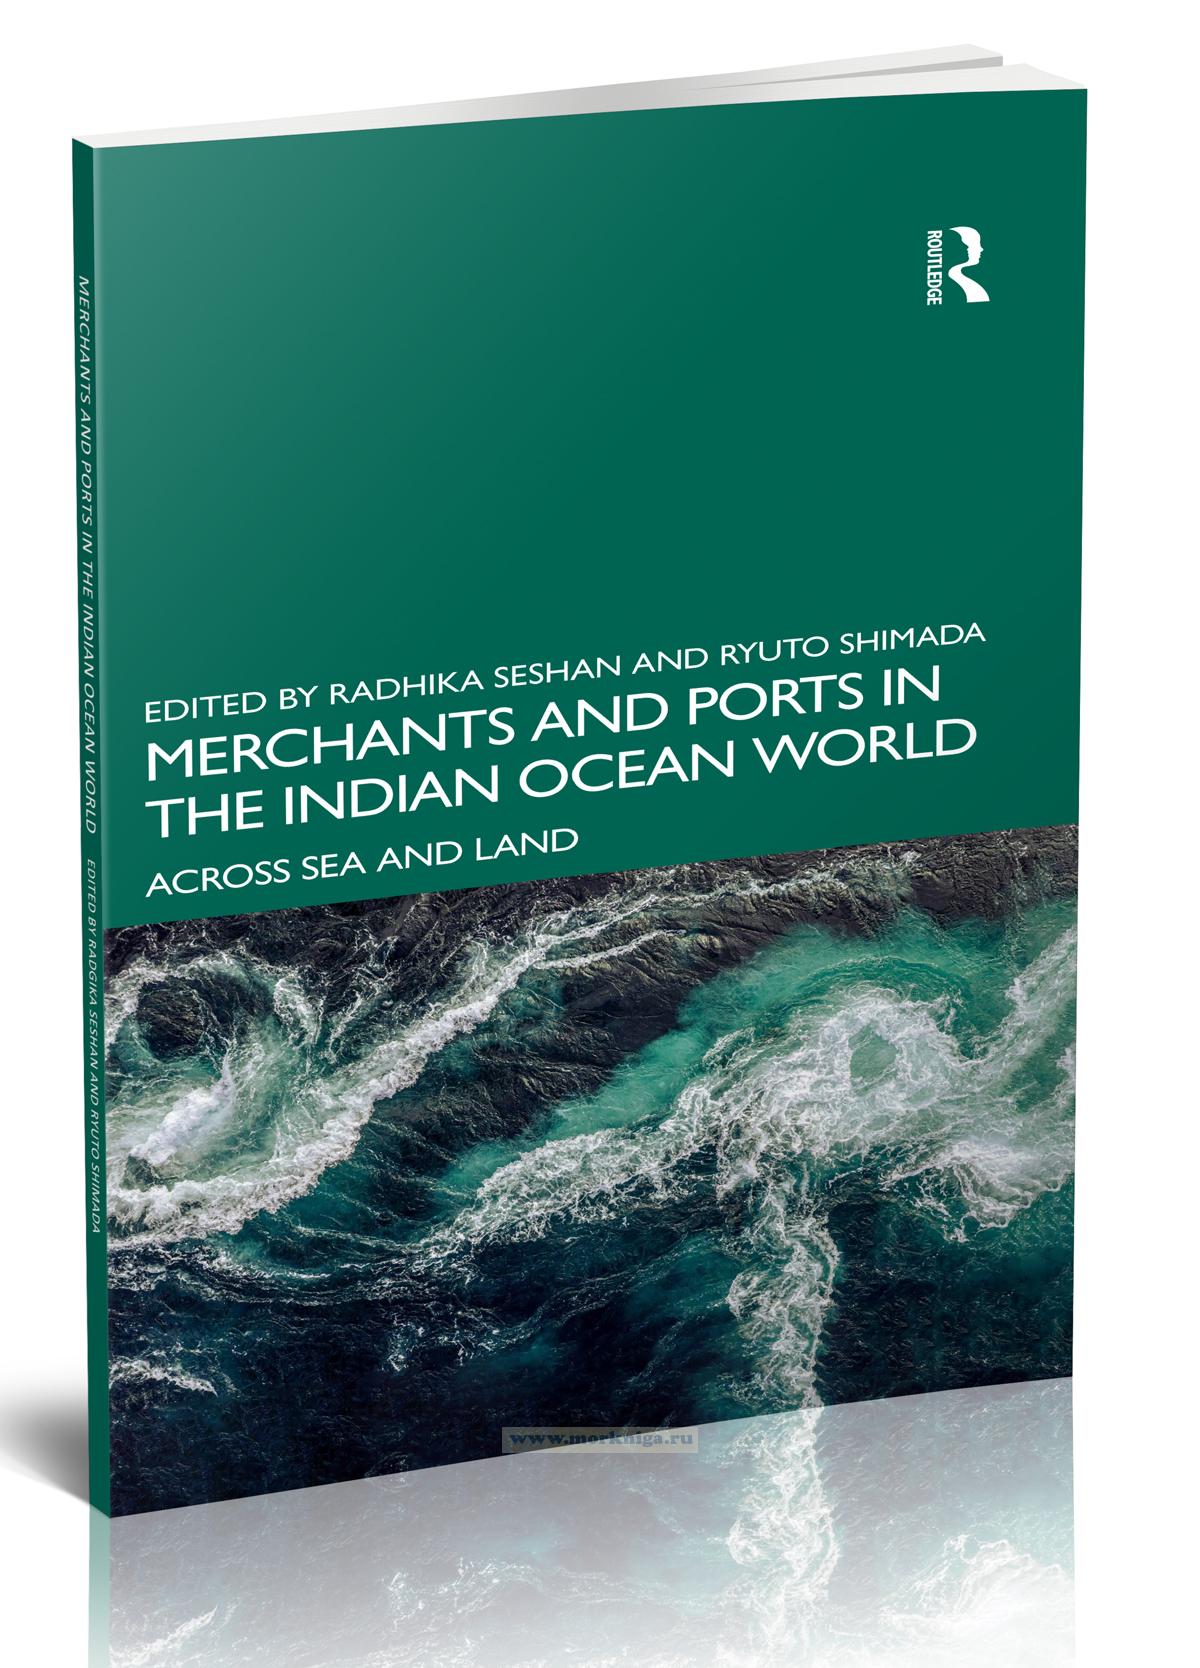 Merchants and Ports in the Indian Ocean World. Across Sea and Land/Торговцы и порты в мире Индийского океана. Через море и сушу